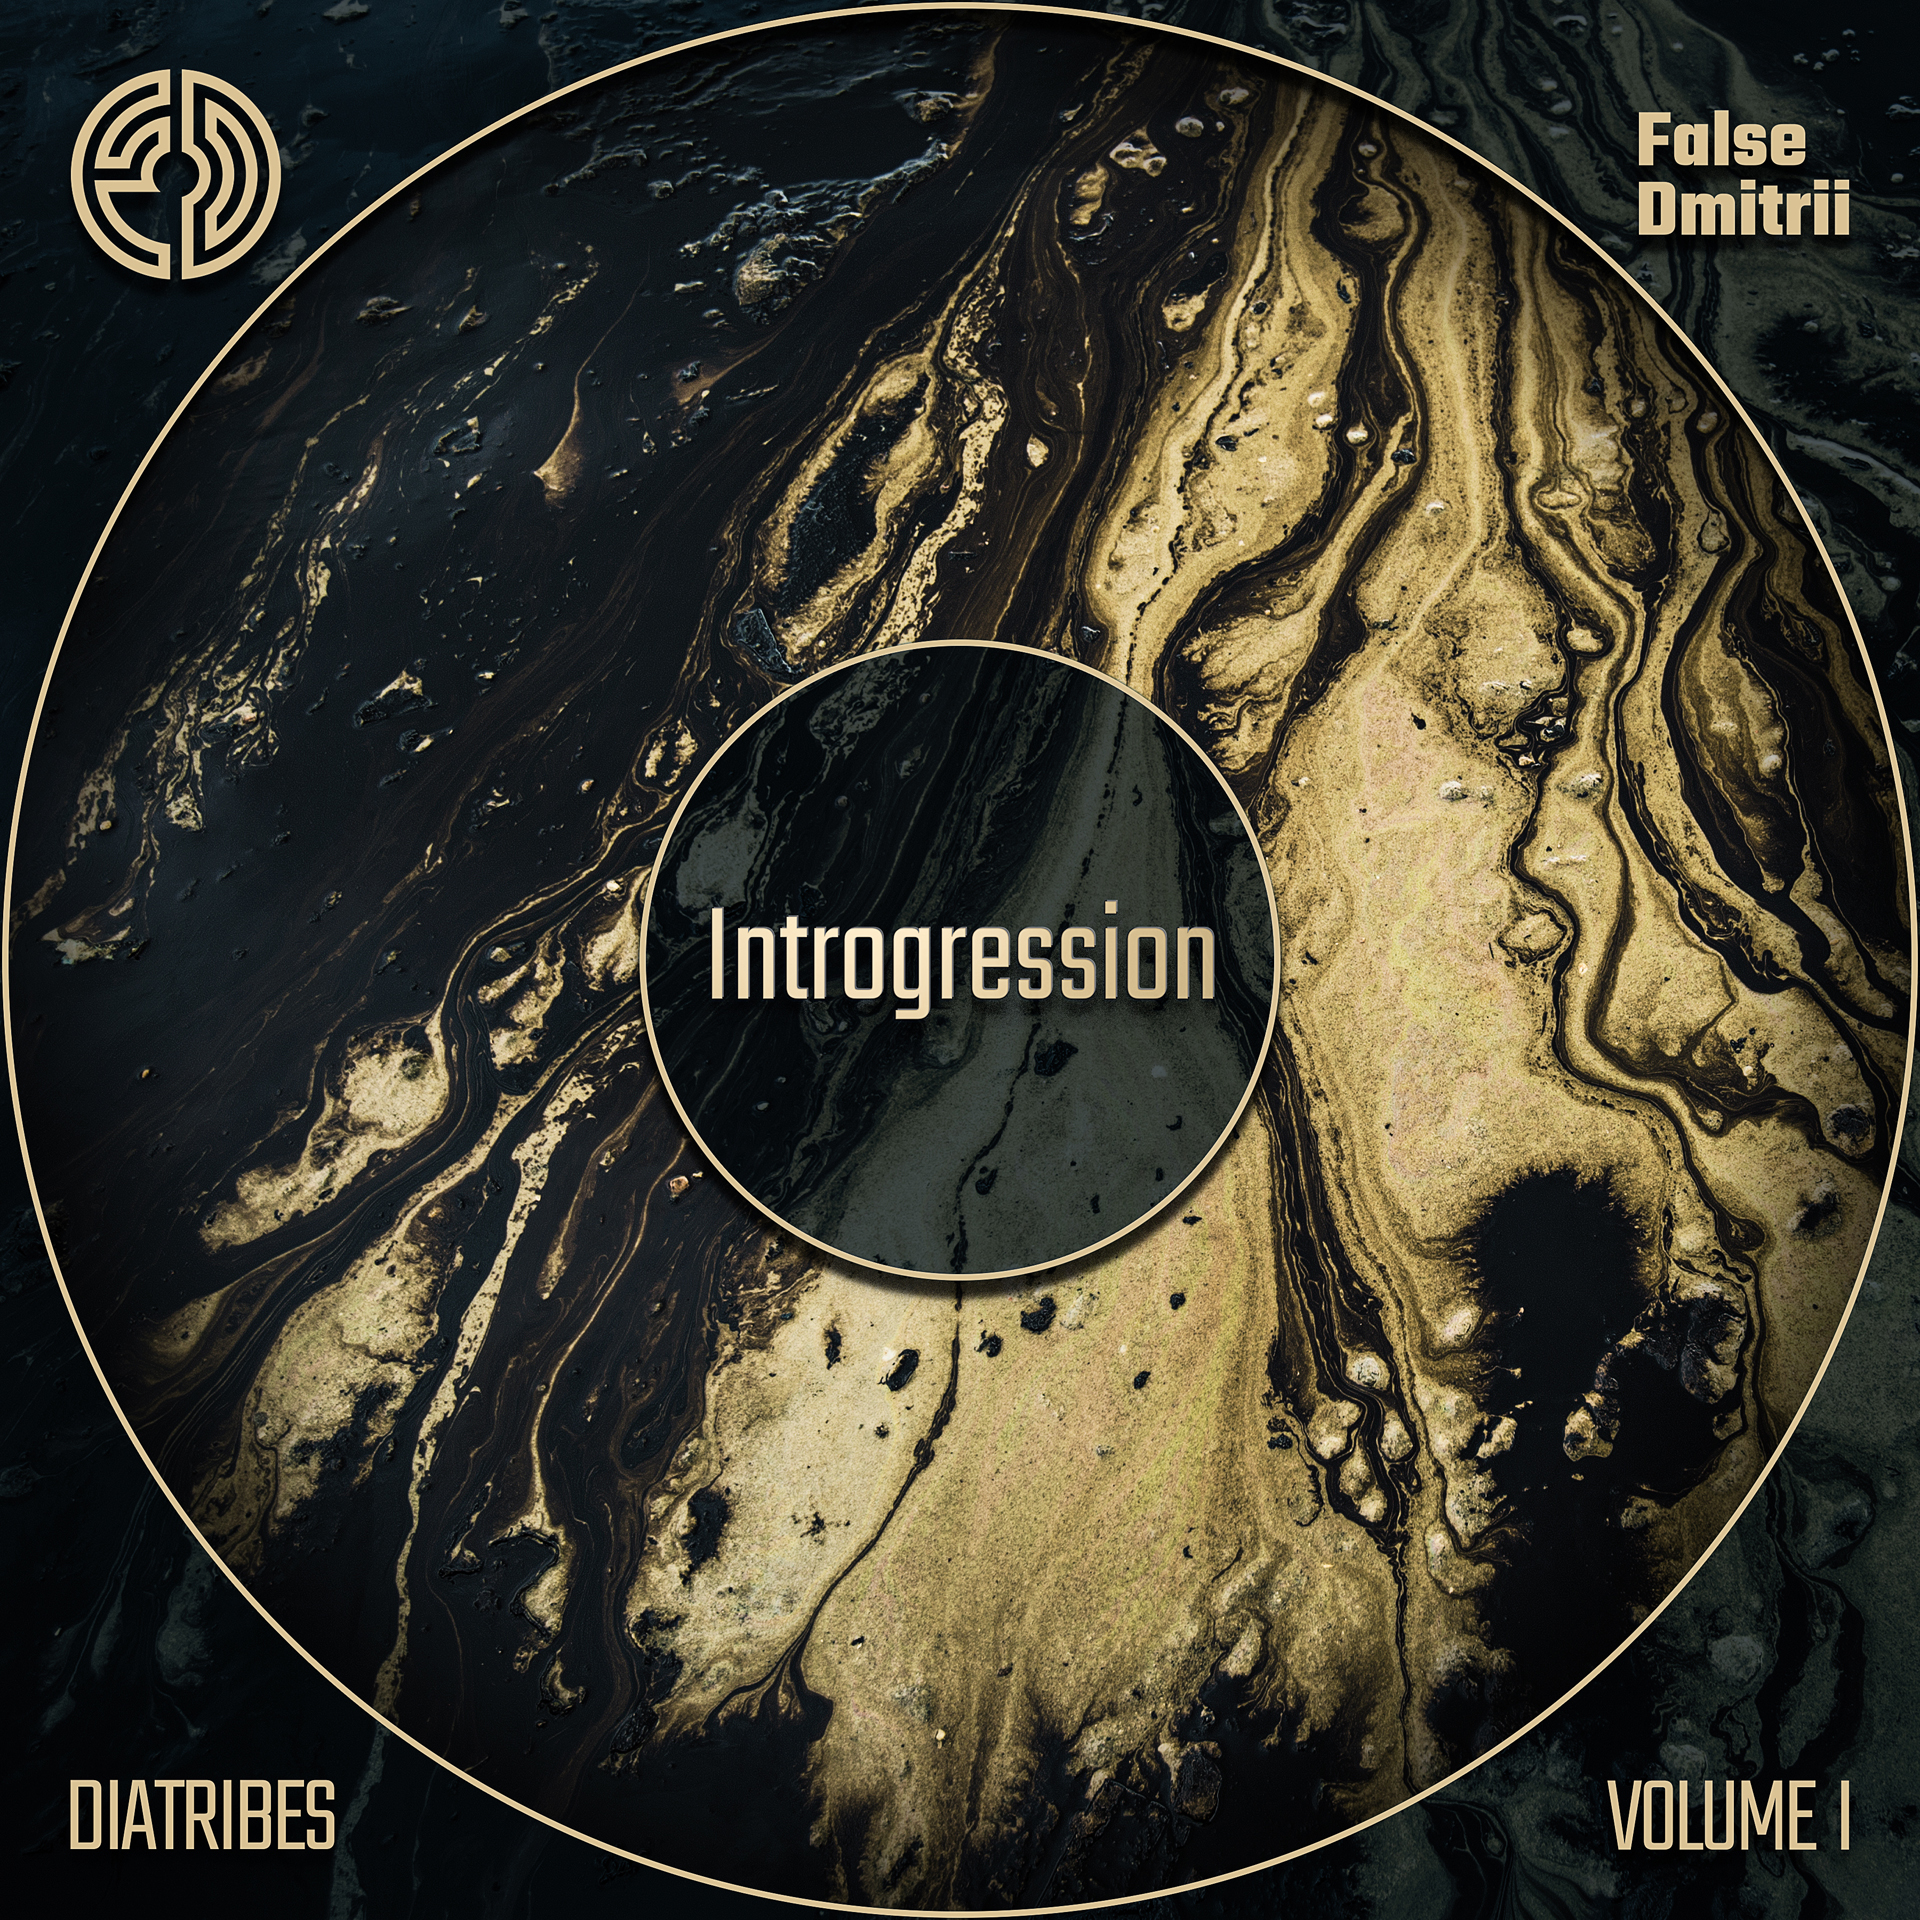 DIATRIBES: VOLUME I - Introgression